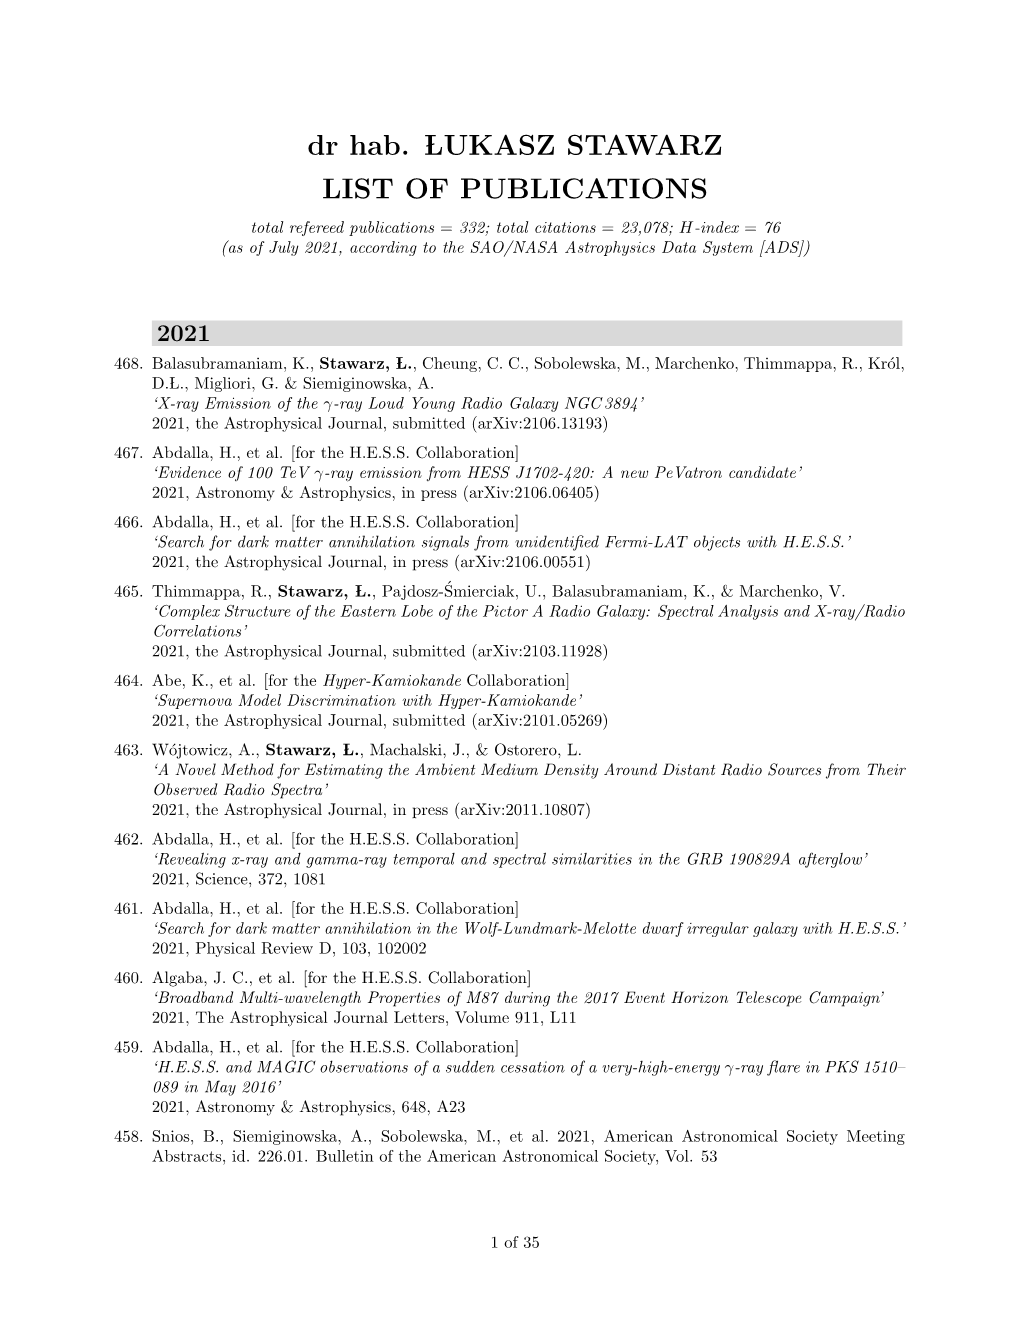 Dr Hab. LUKASZ STAWARZ LIST of PUBLICATIONS